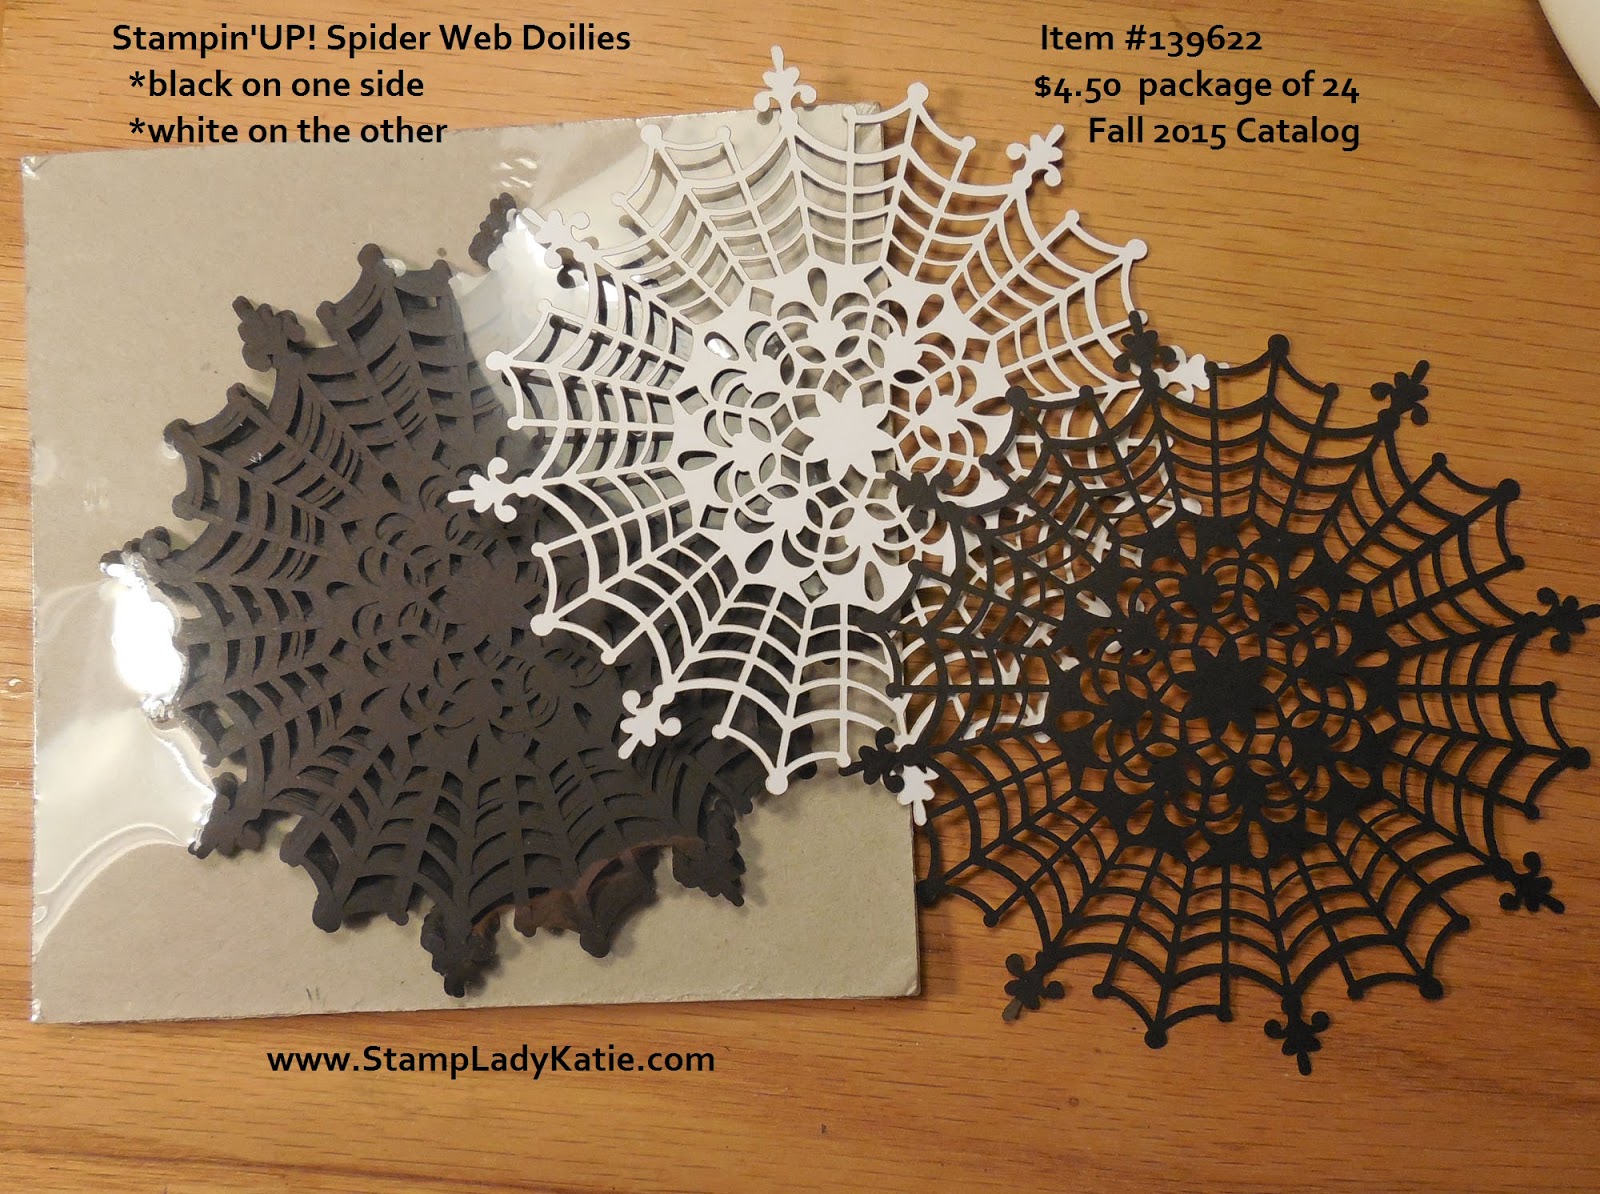 StampLadyKatie.com: Spider Web Doily Snowflake Card